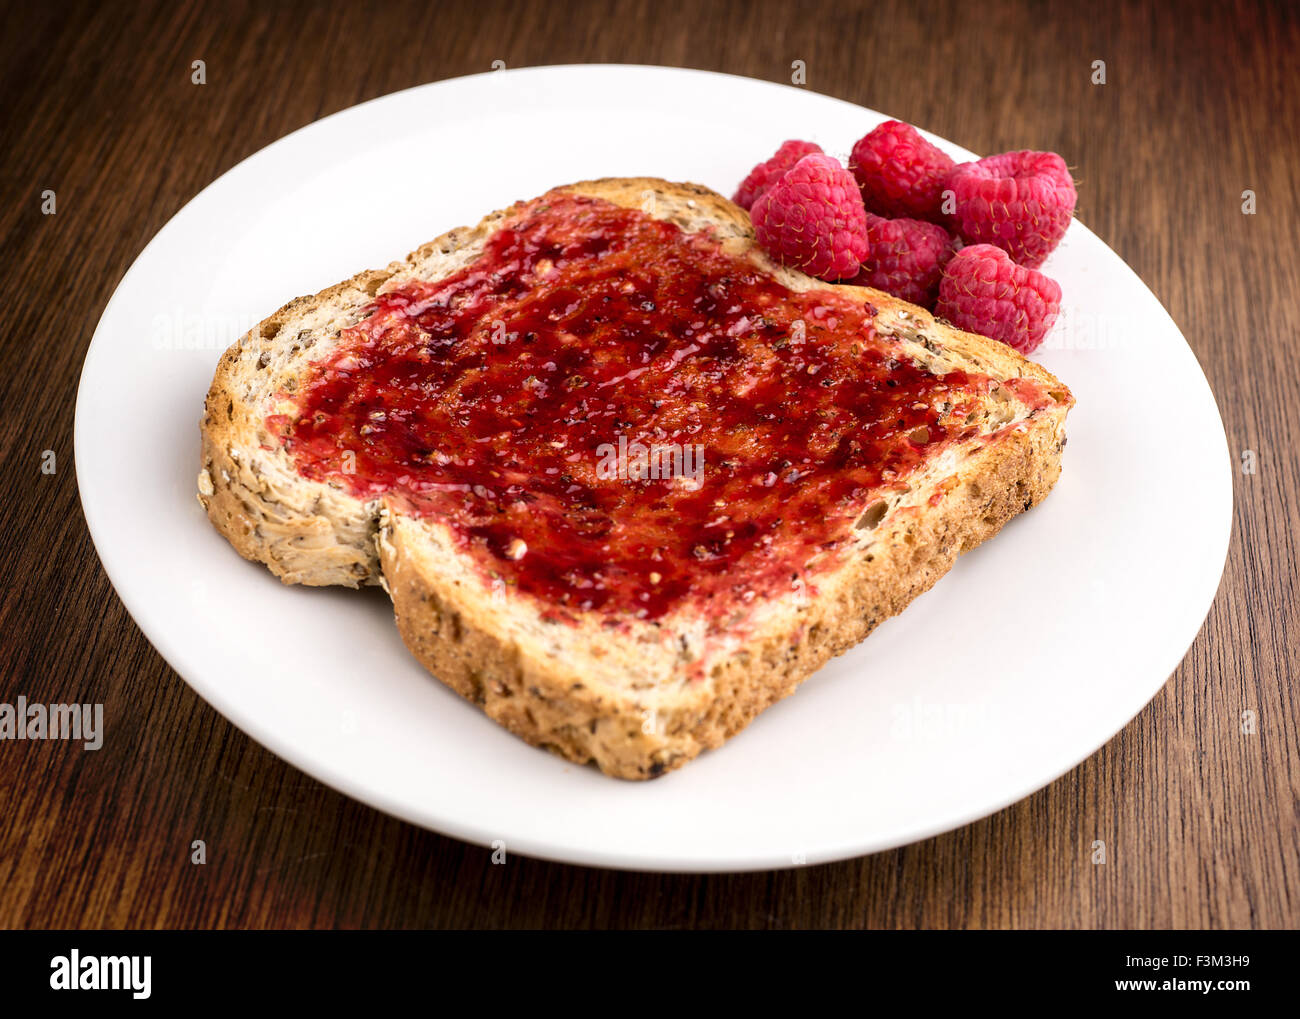 Tasty rasberry jam spread on whole wheat toast Stock Photo